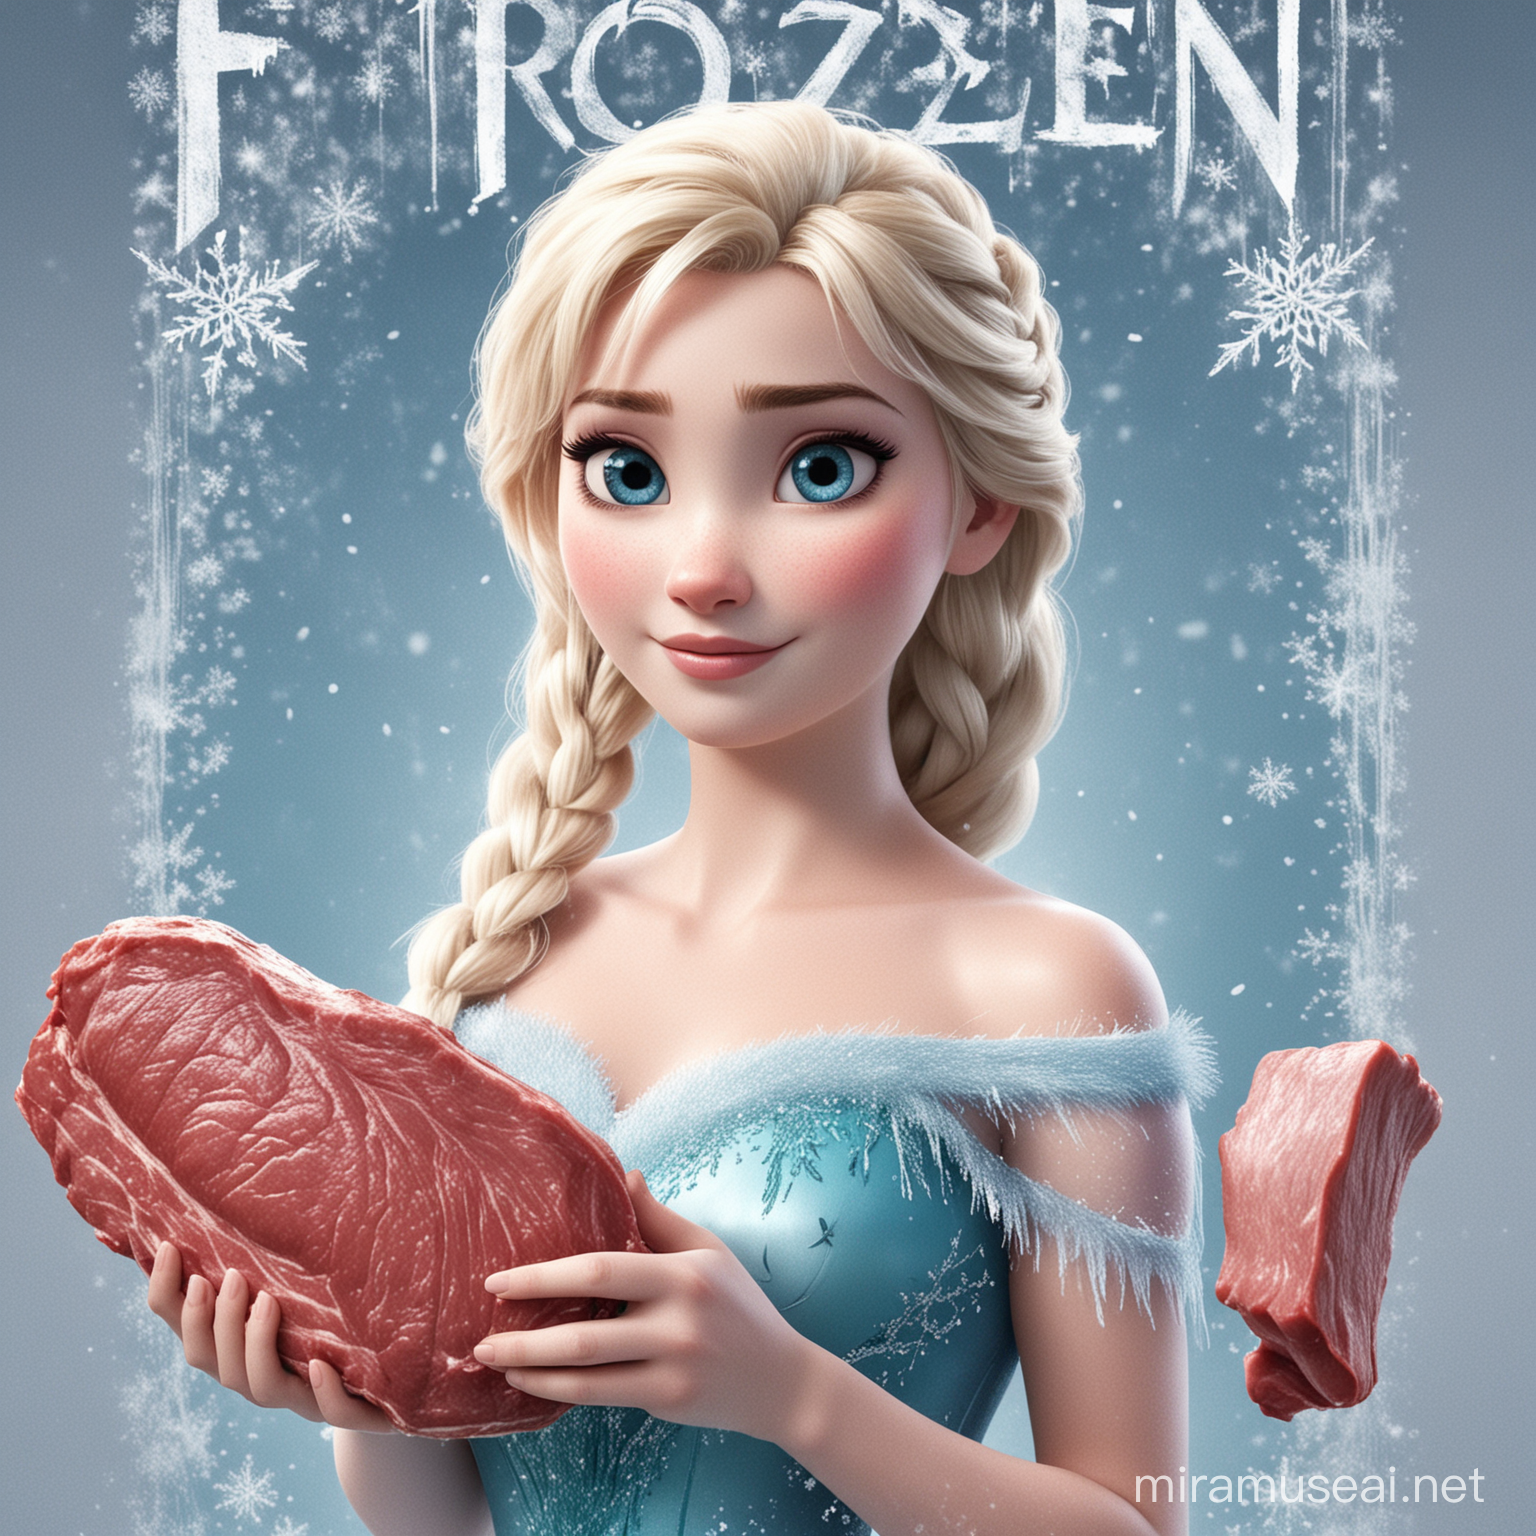 Frozen Meat Elsa Holding a Frozen Delicacy